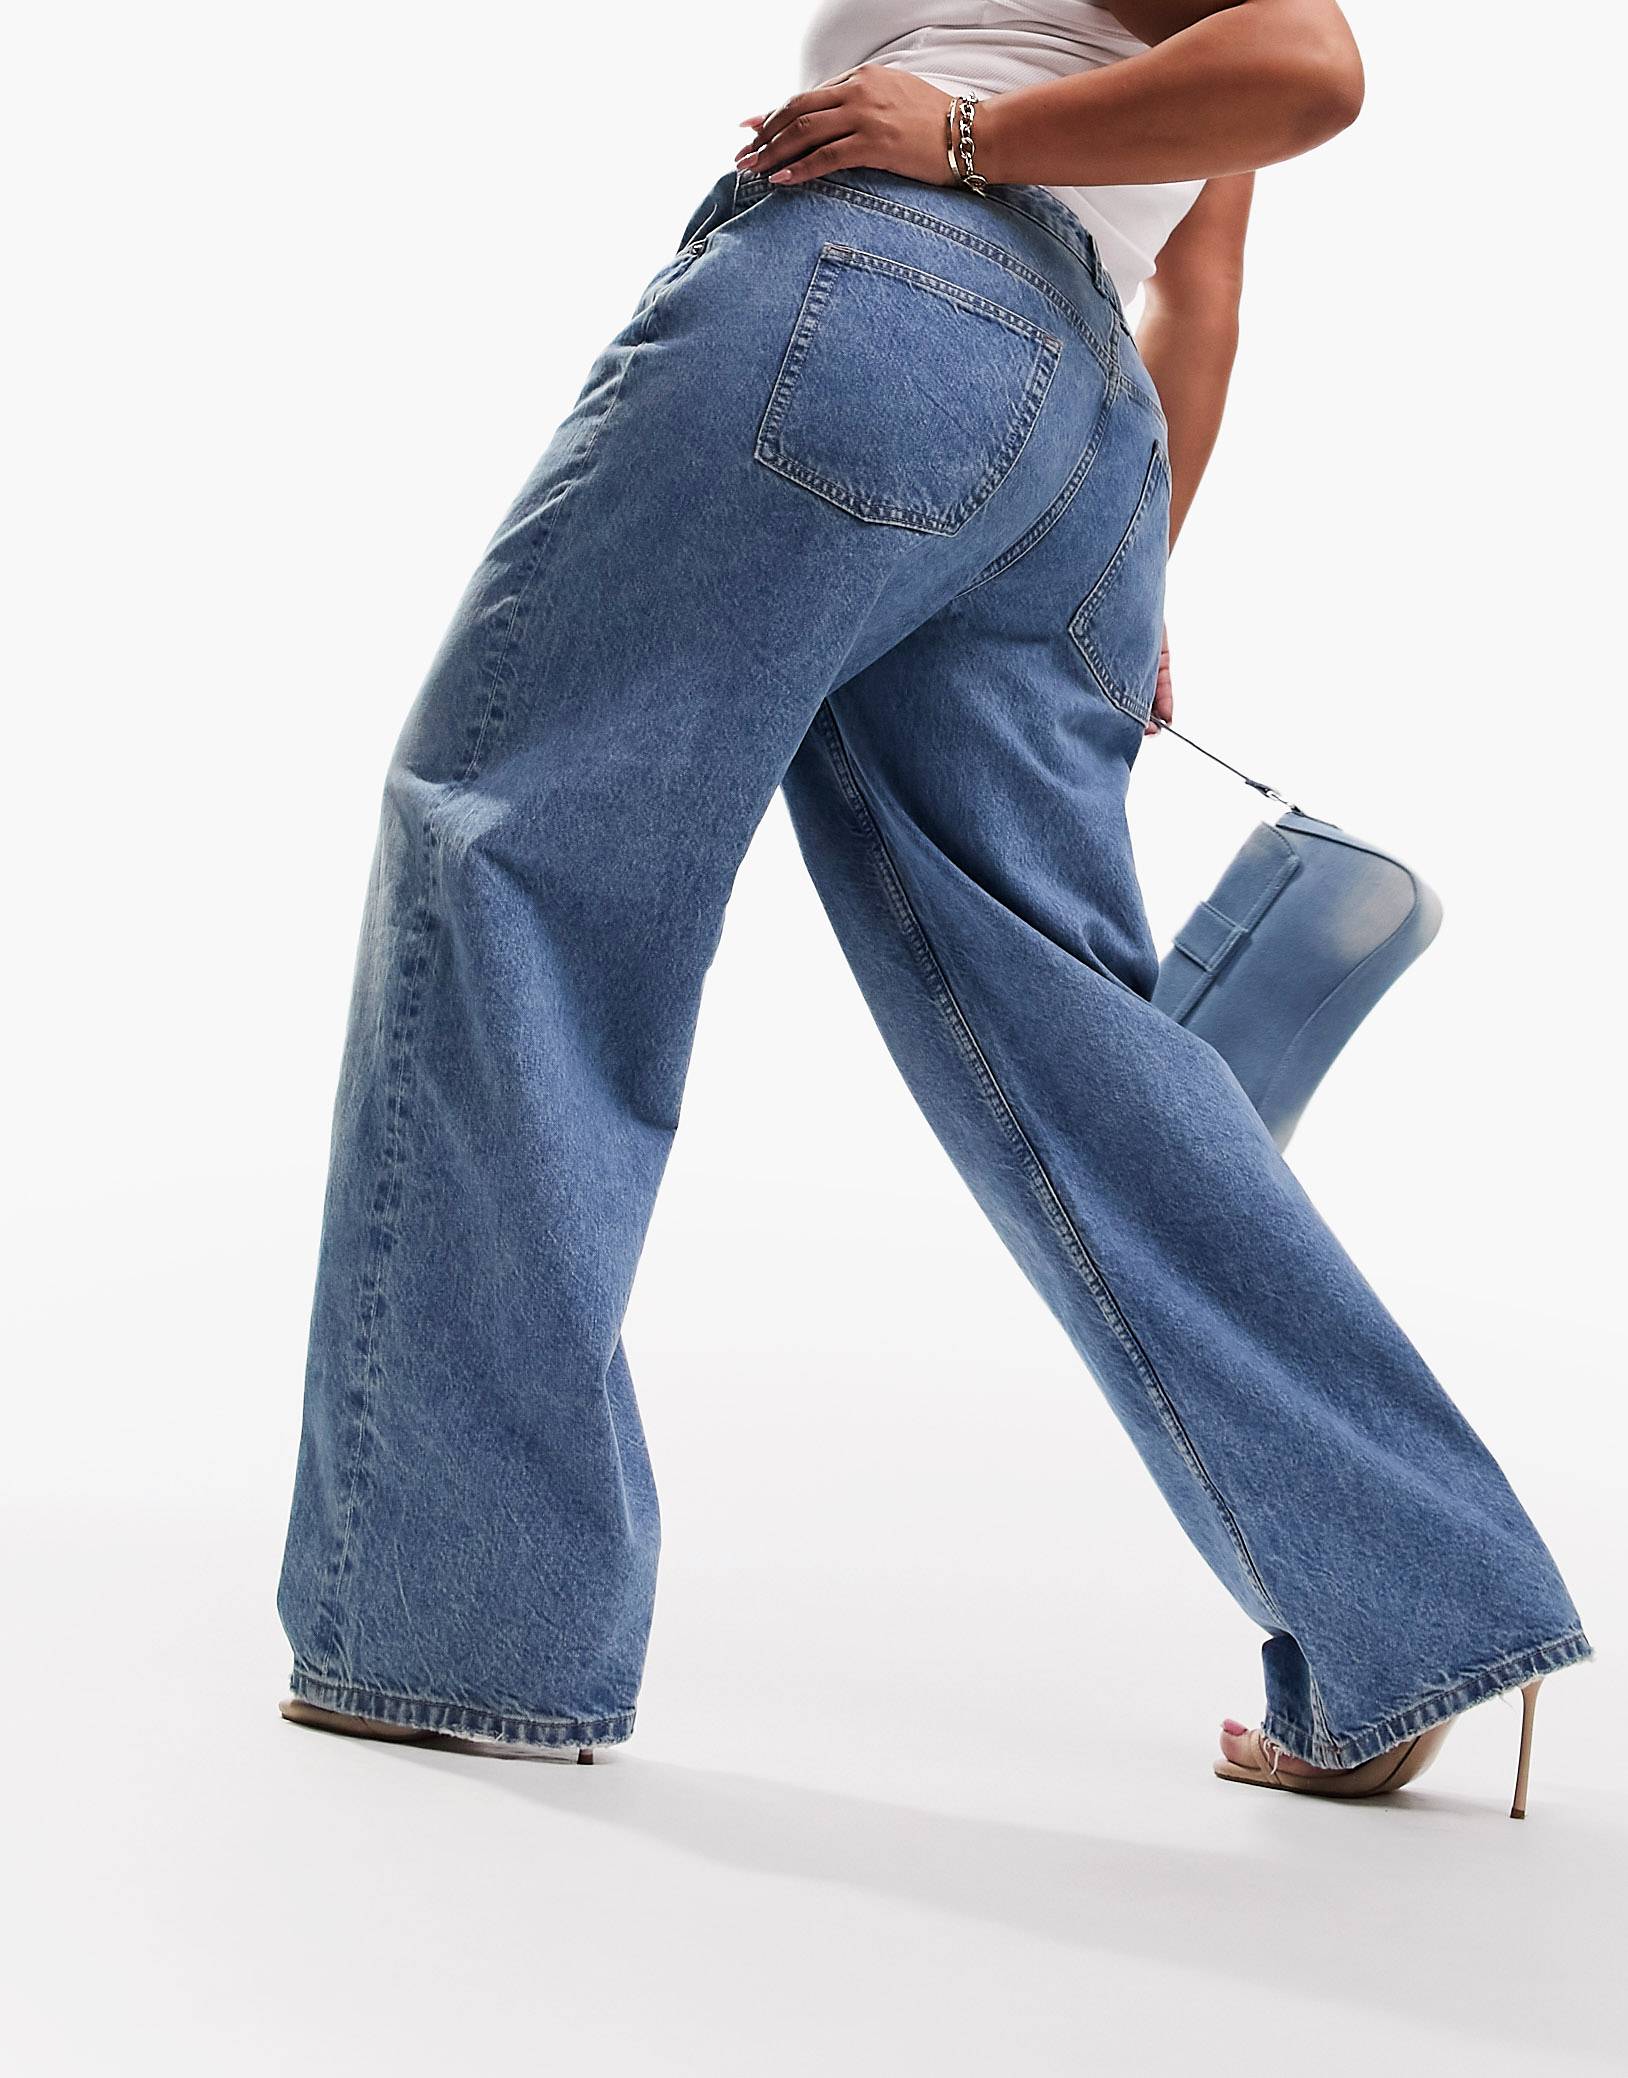 6 Fail-Safe Ways to Wear Wide-Leg Jeans